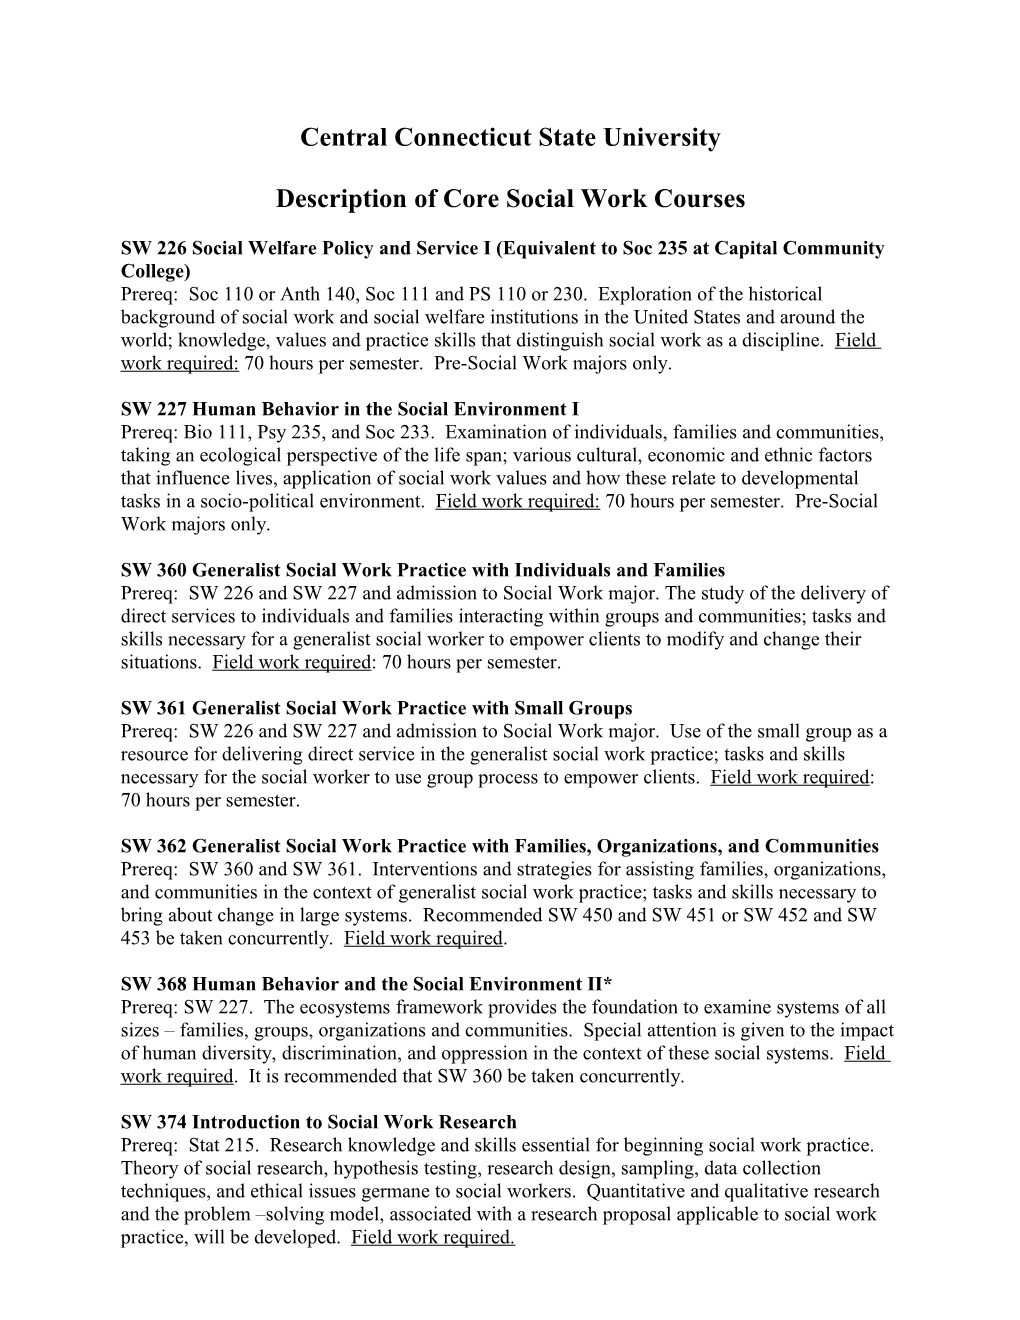 Description of Core Social Work Courses